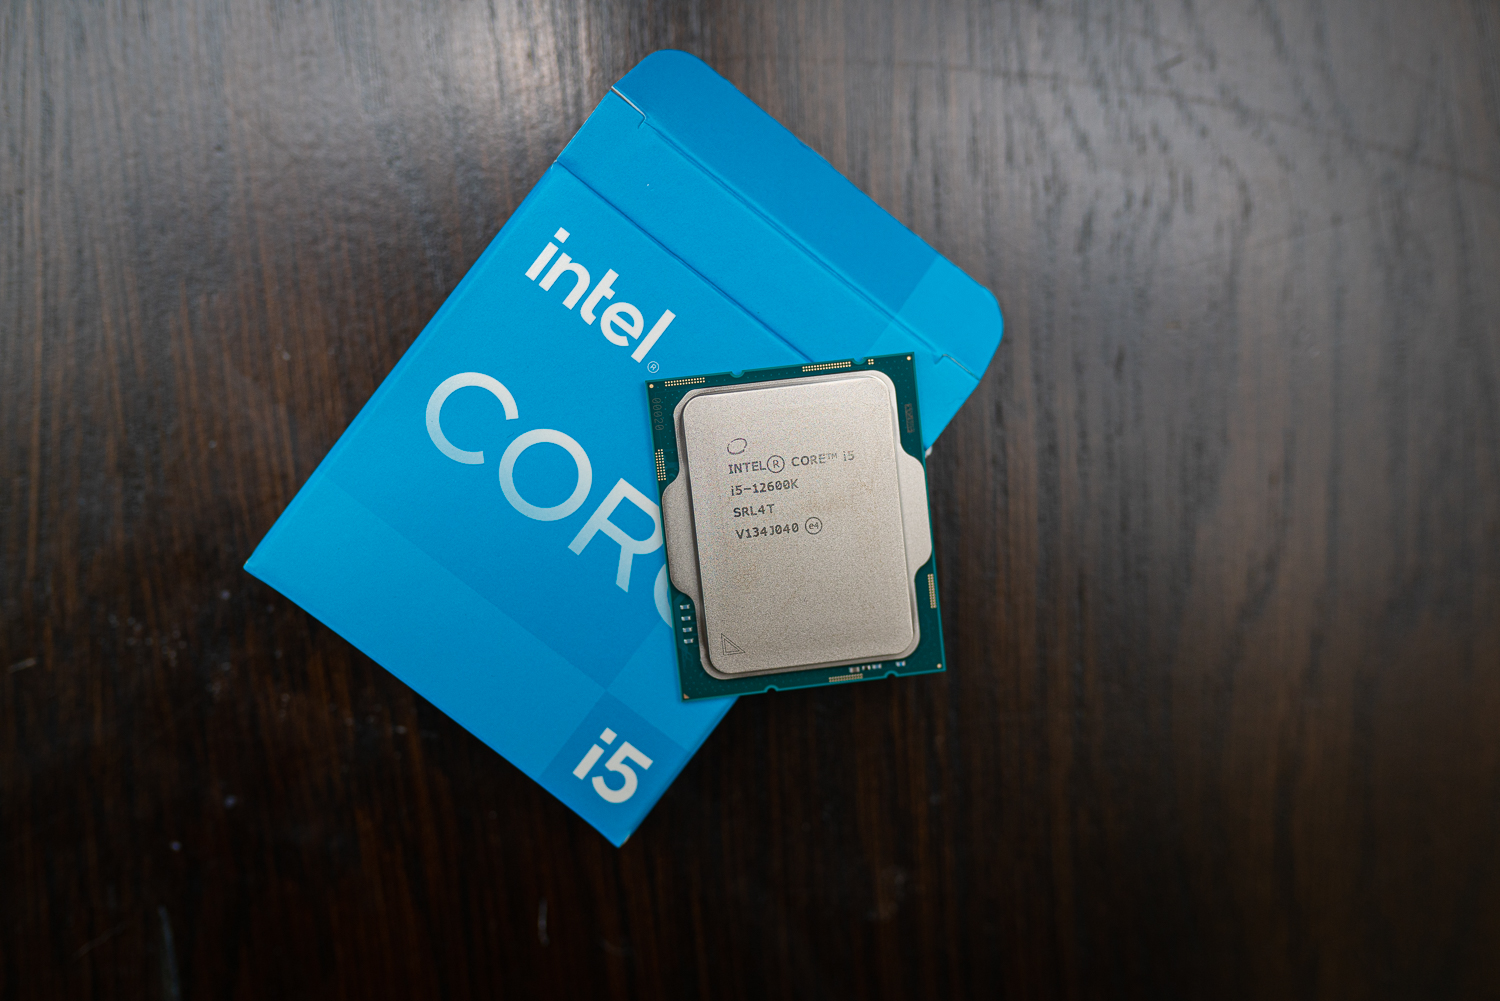 Ryzen 5 7600X vs. Intel Core i5-12600K